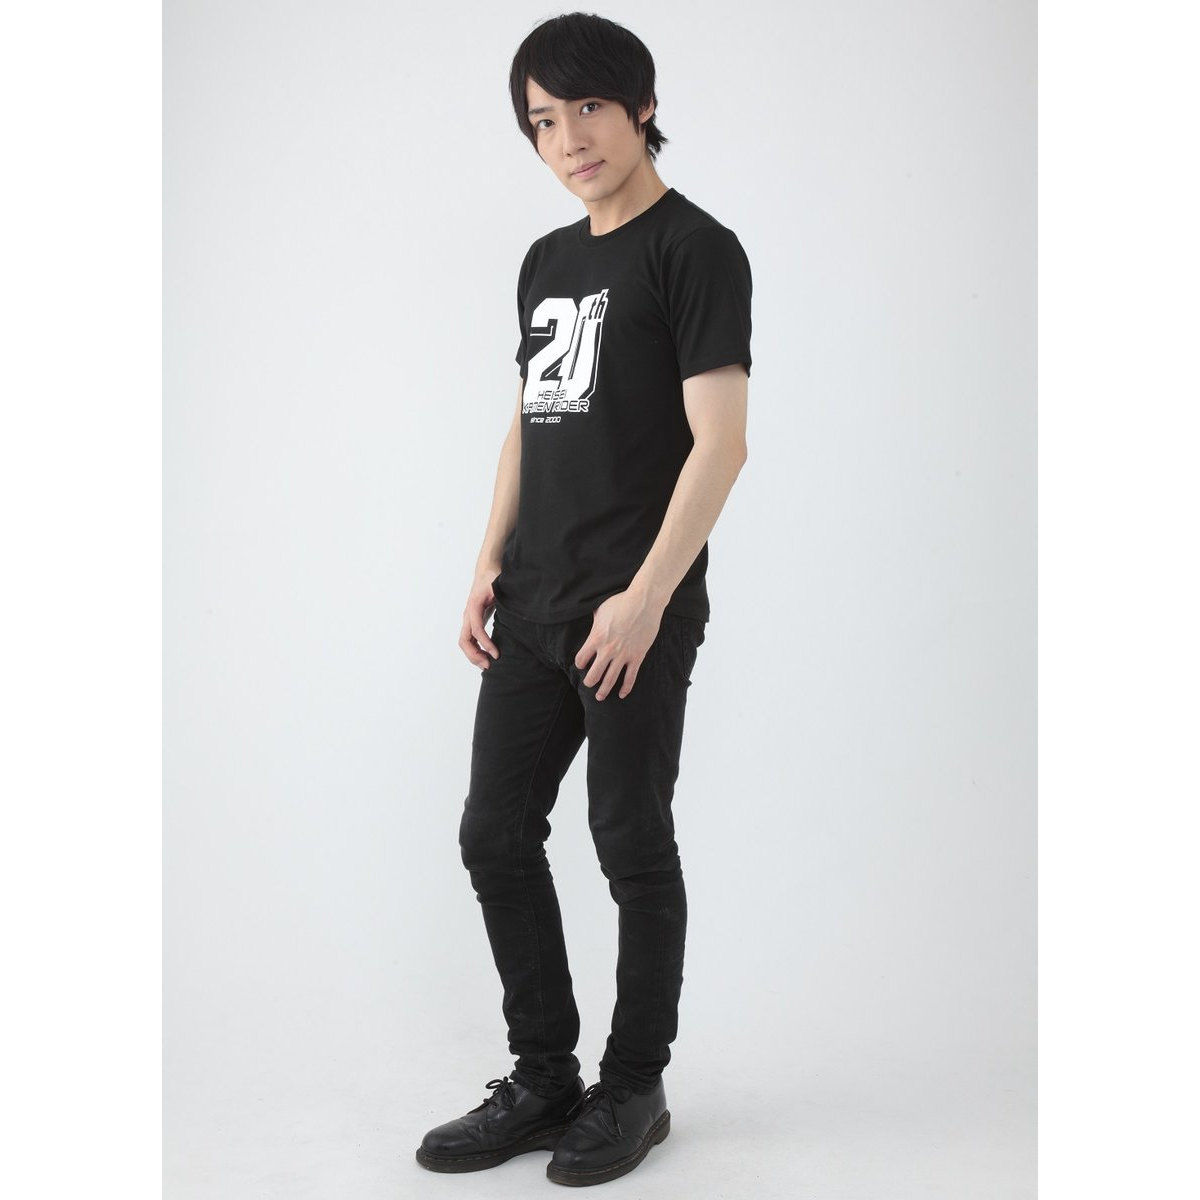 KAMEN RIDER ZI-O & HEISEI RIDER T-shirt (20th LOGO)